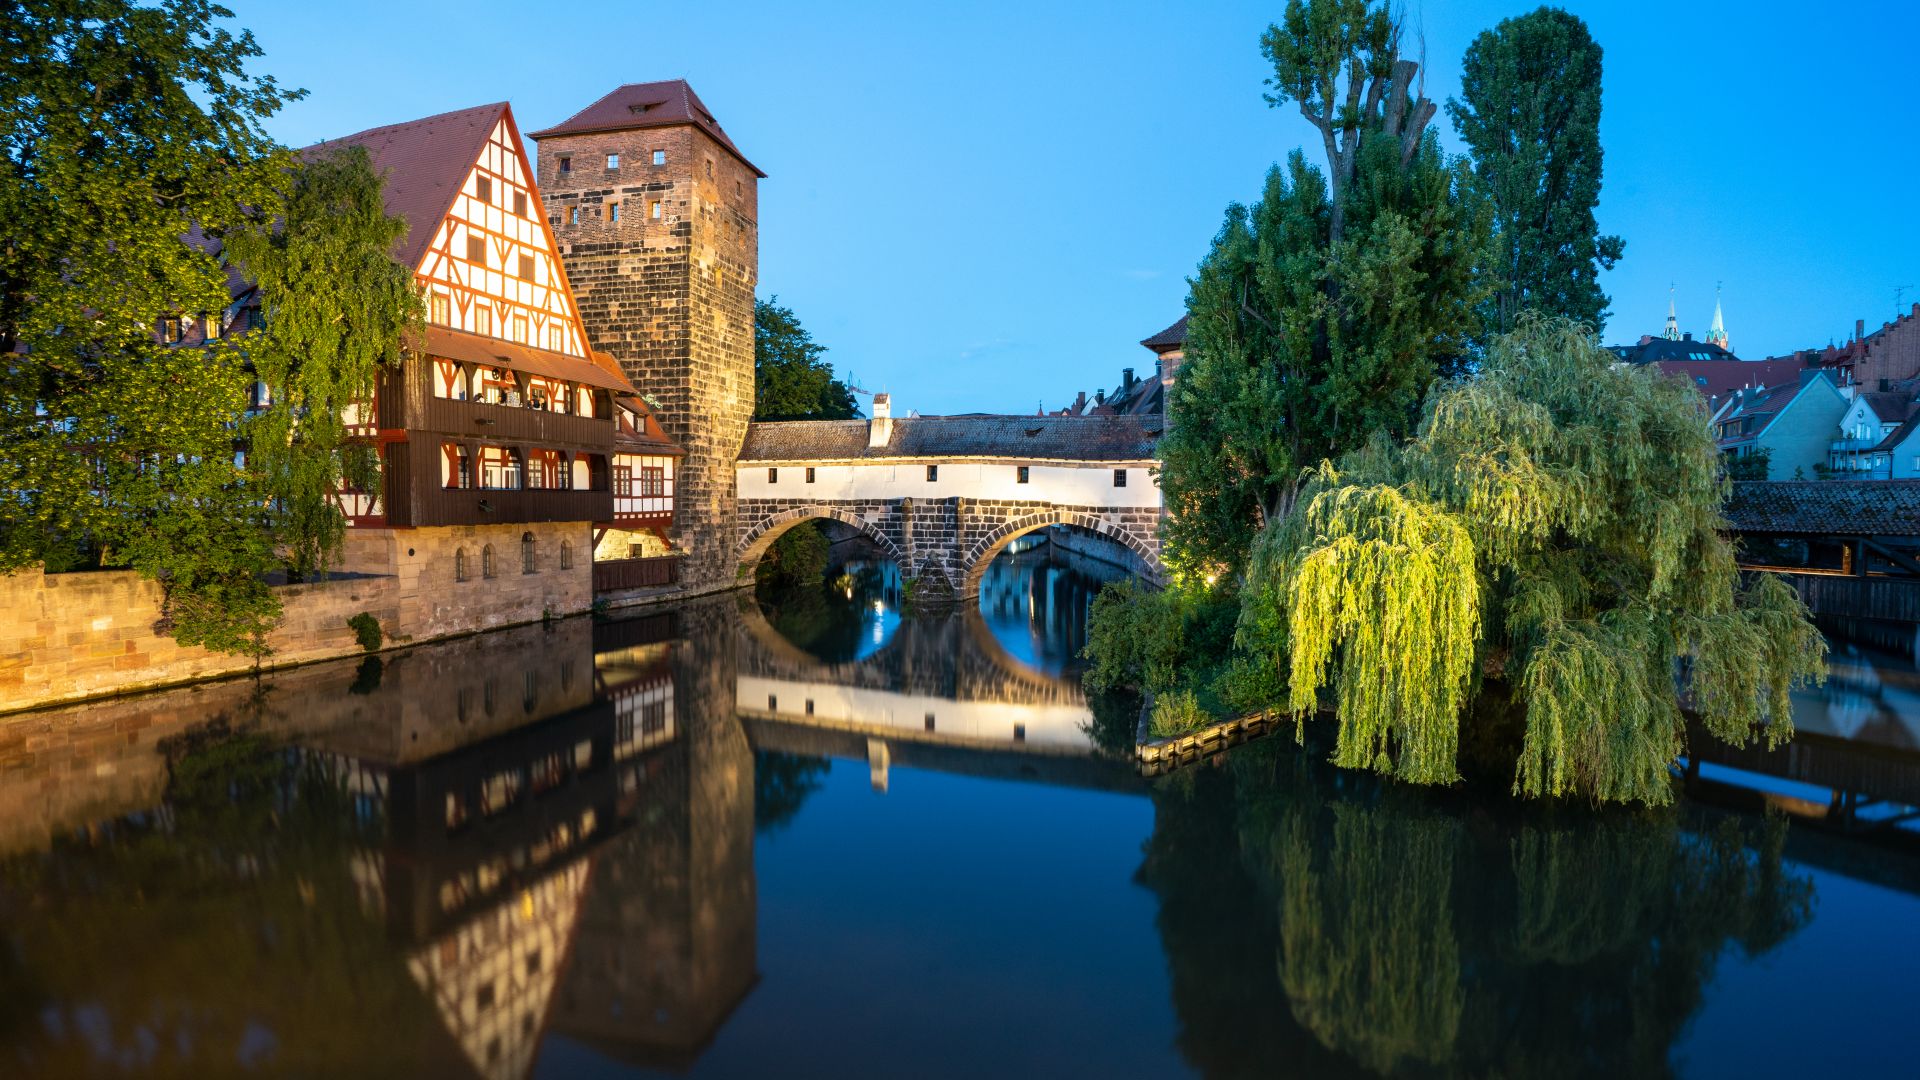 Nuremberg: Hangman's footbridge with hangman's house on the Pegnitz